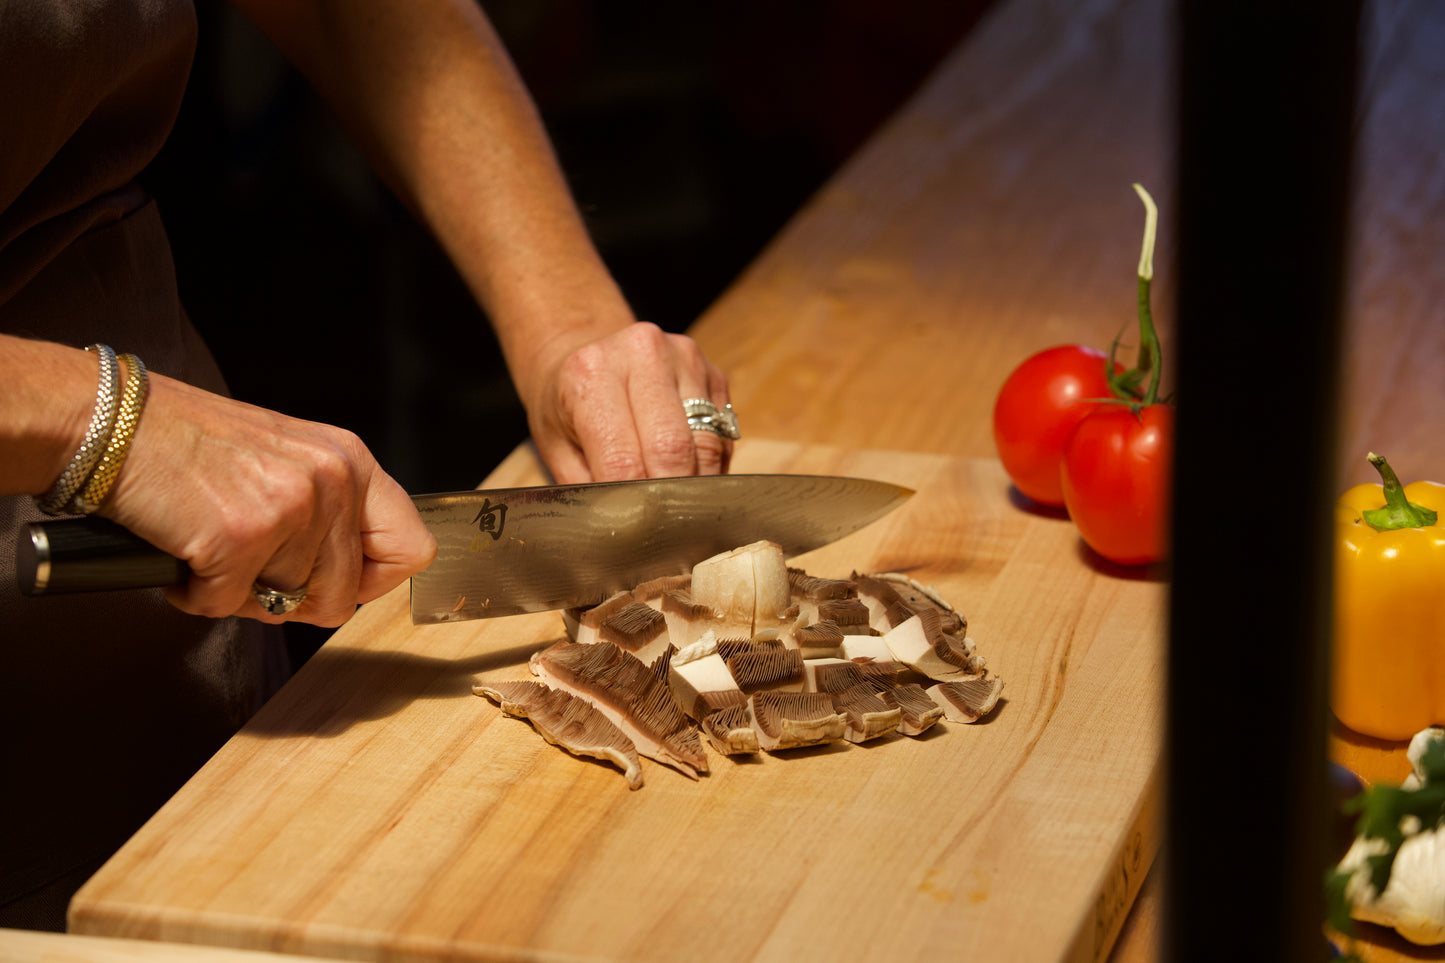 Introductory Knife Skills Class -How to Cut like a Pro- Salad Skills - Ocia Hartley 7/16/24 - 5:30 - 7:00 P.M.